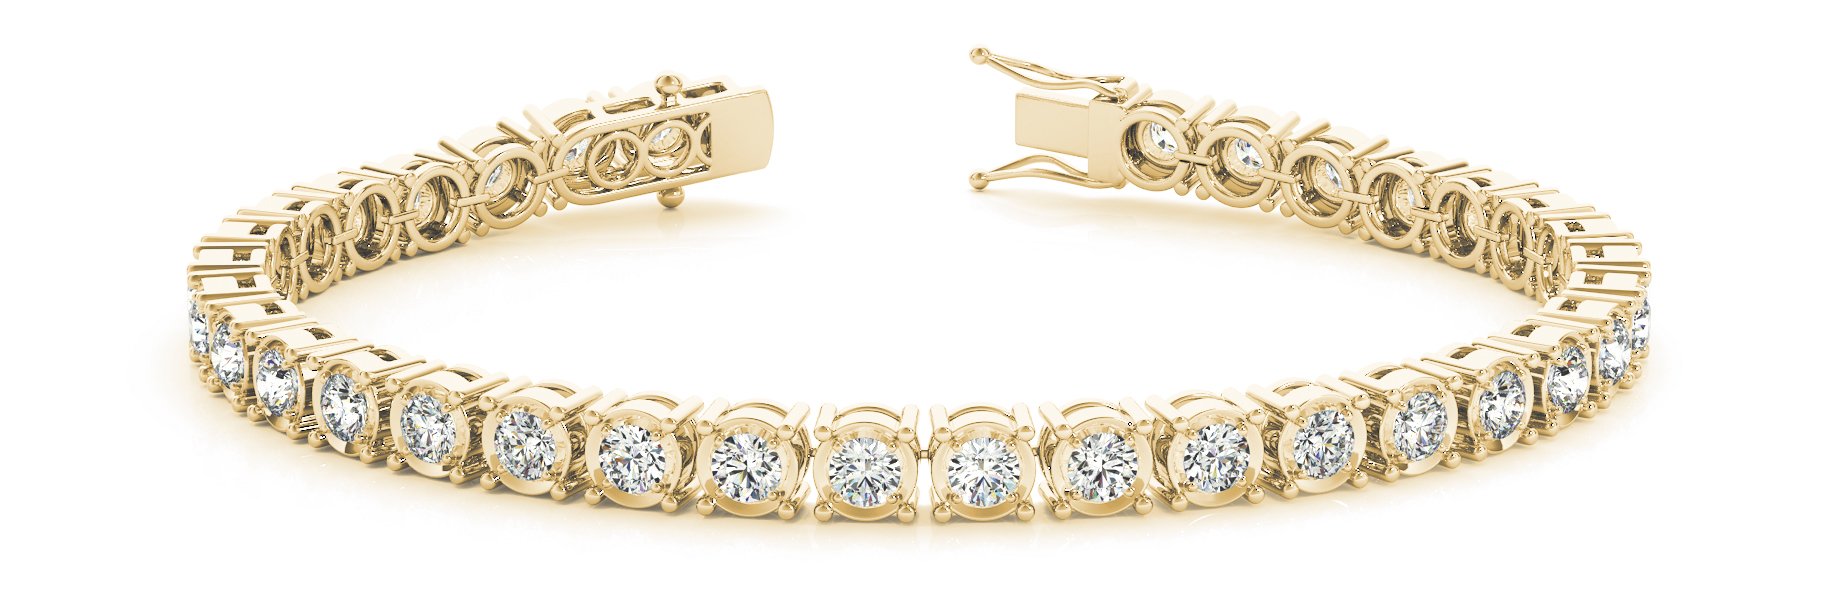 Fancy Diamond Bracelet Ladies 1.10ct tw - 14kt Yellow Gold